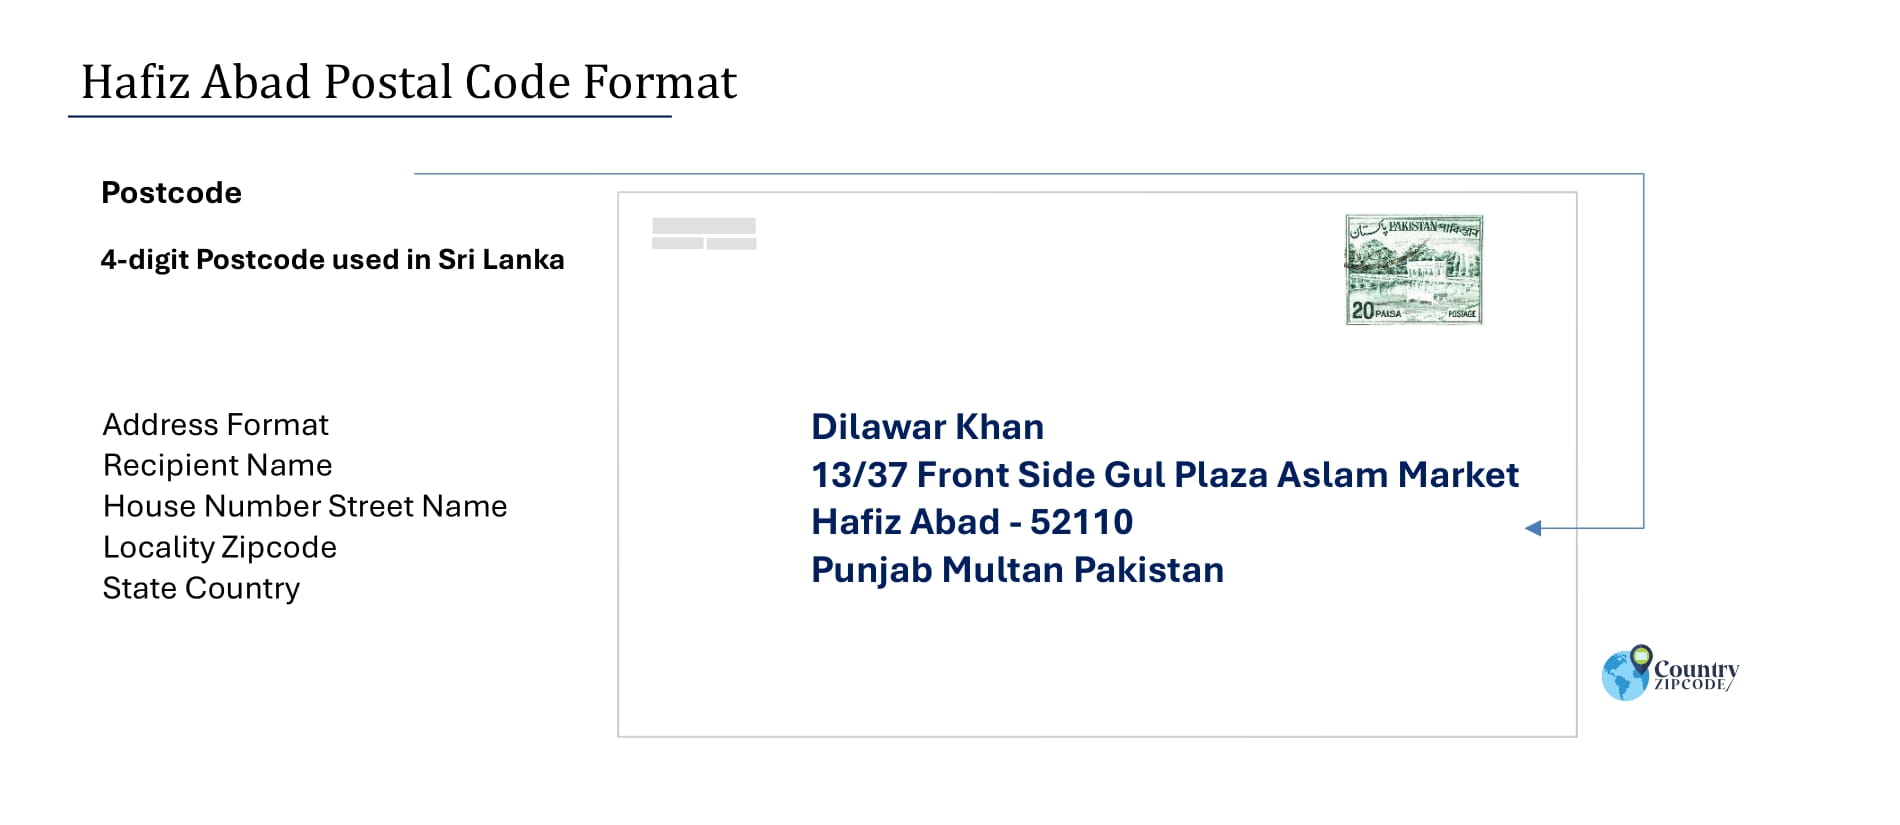 Example of Hafiz Abad Pakistan Postal code and Address format